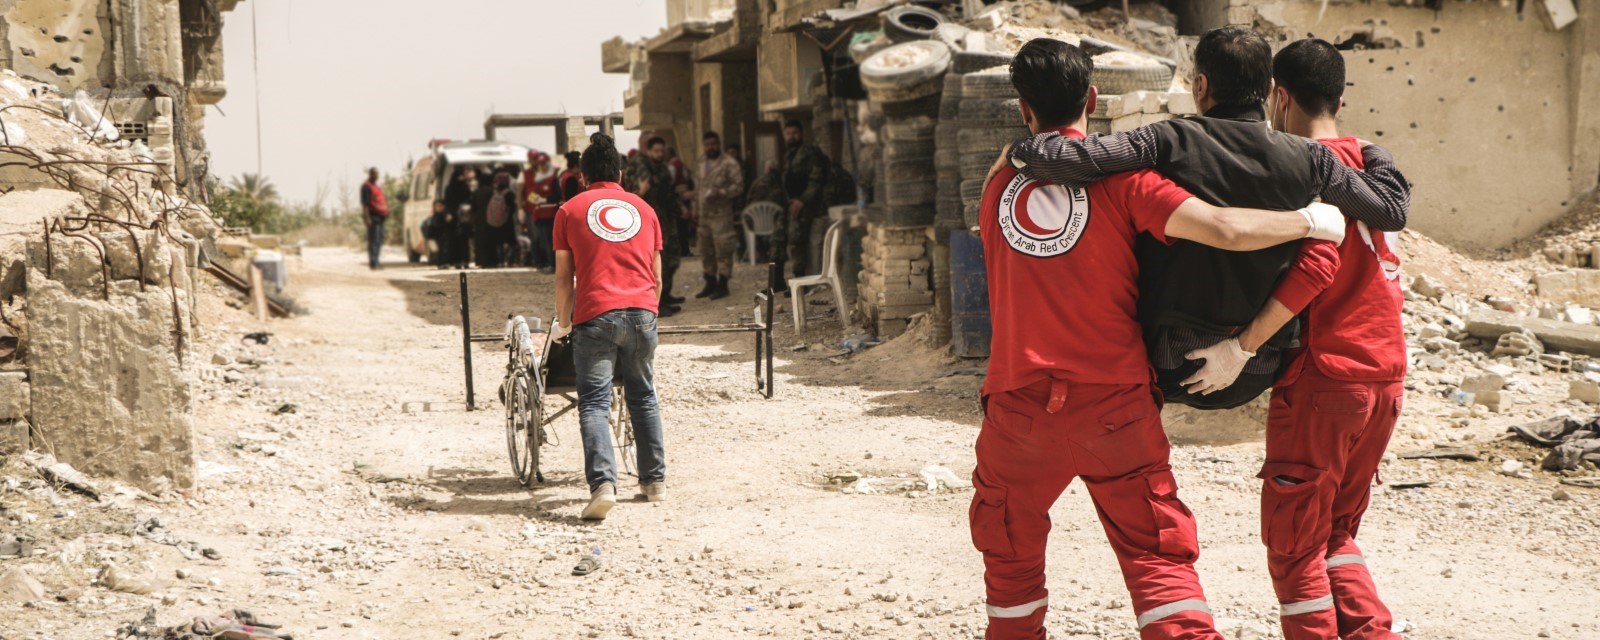 To frivillige fra Syrisk Røde Halvmåne bærer en skadet mann. En mannen frivillig går i front med en rullestol gjennom utbombede gater.